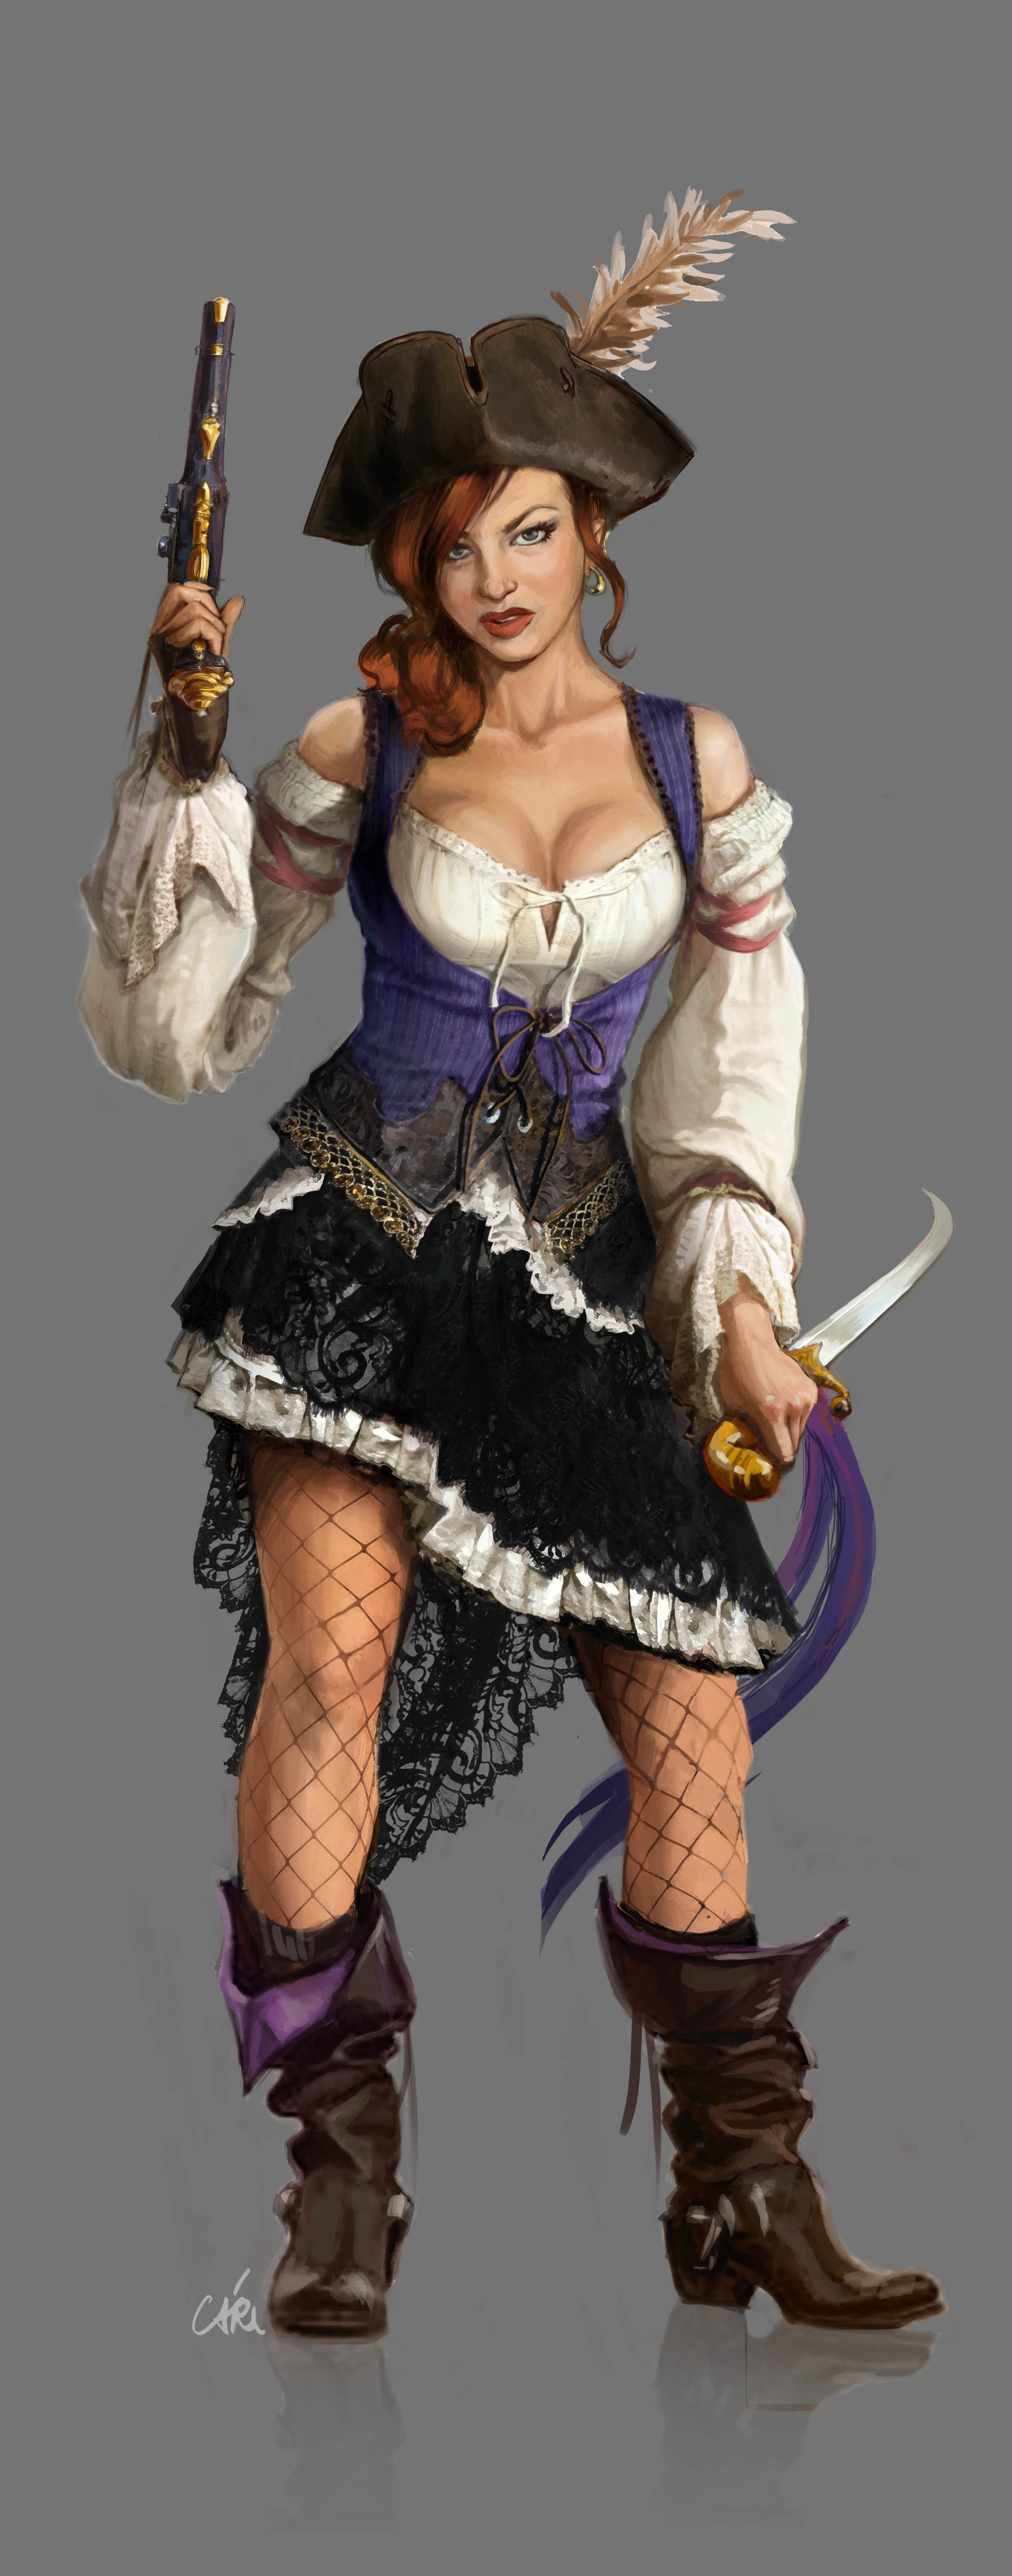 Sexy Pirate Women Art 4148